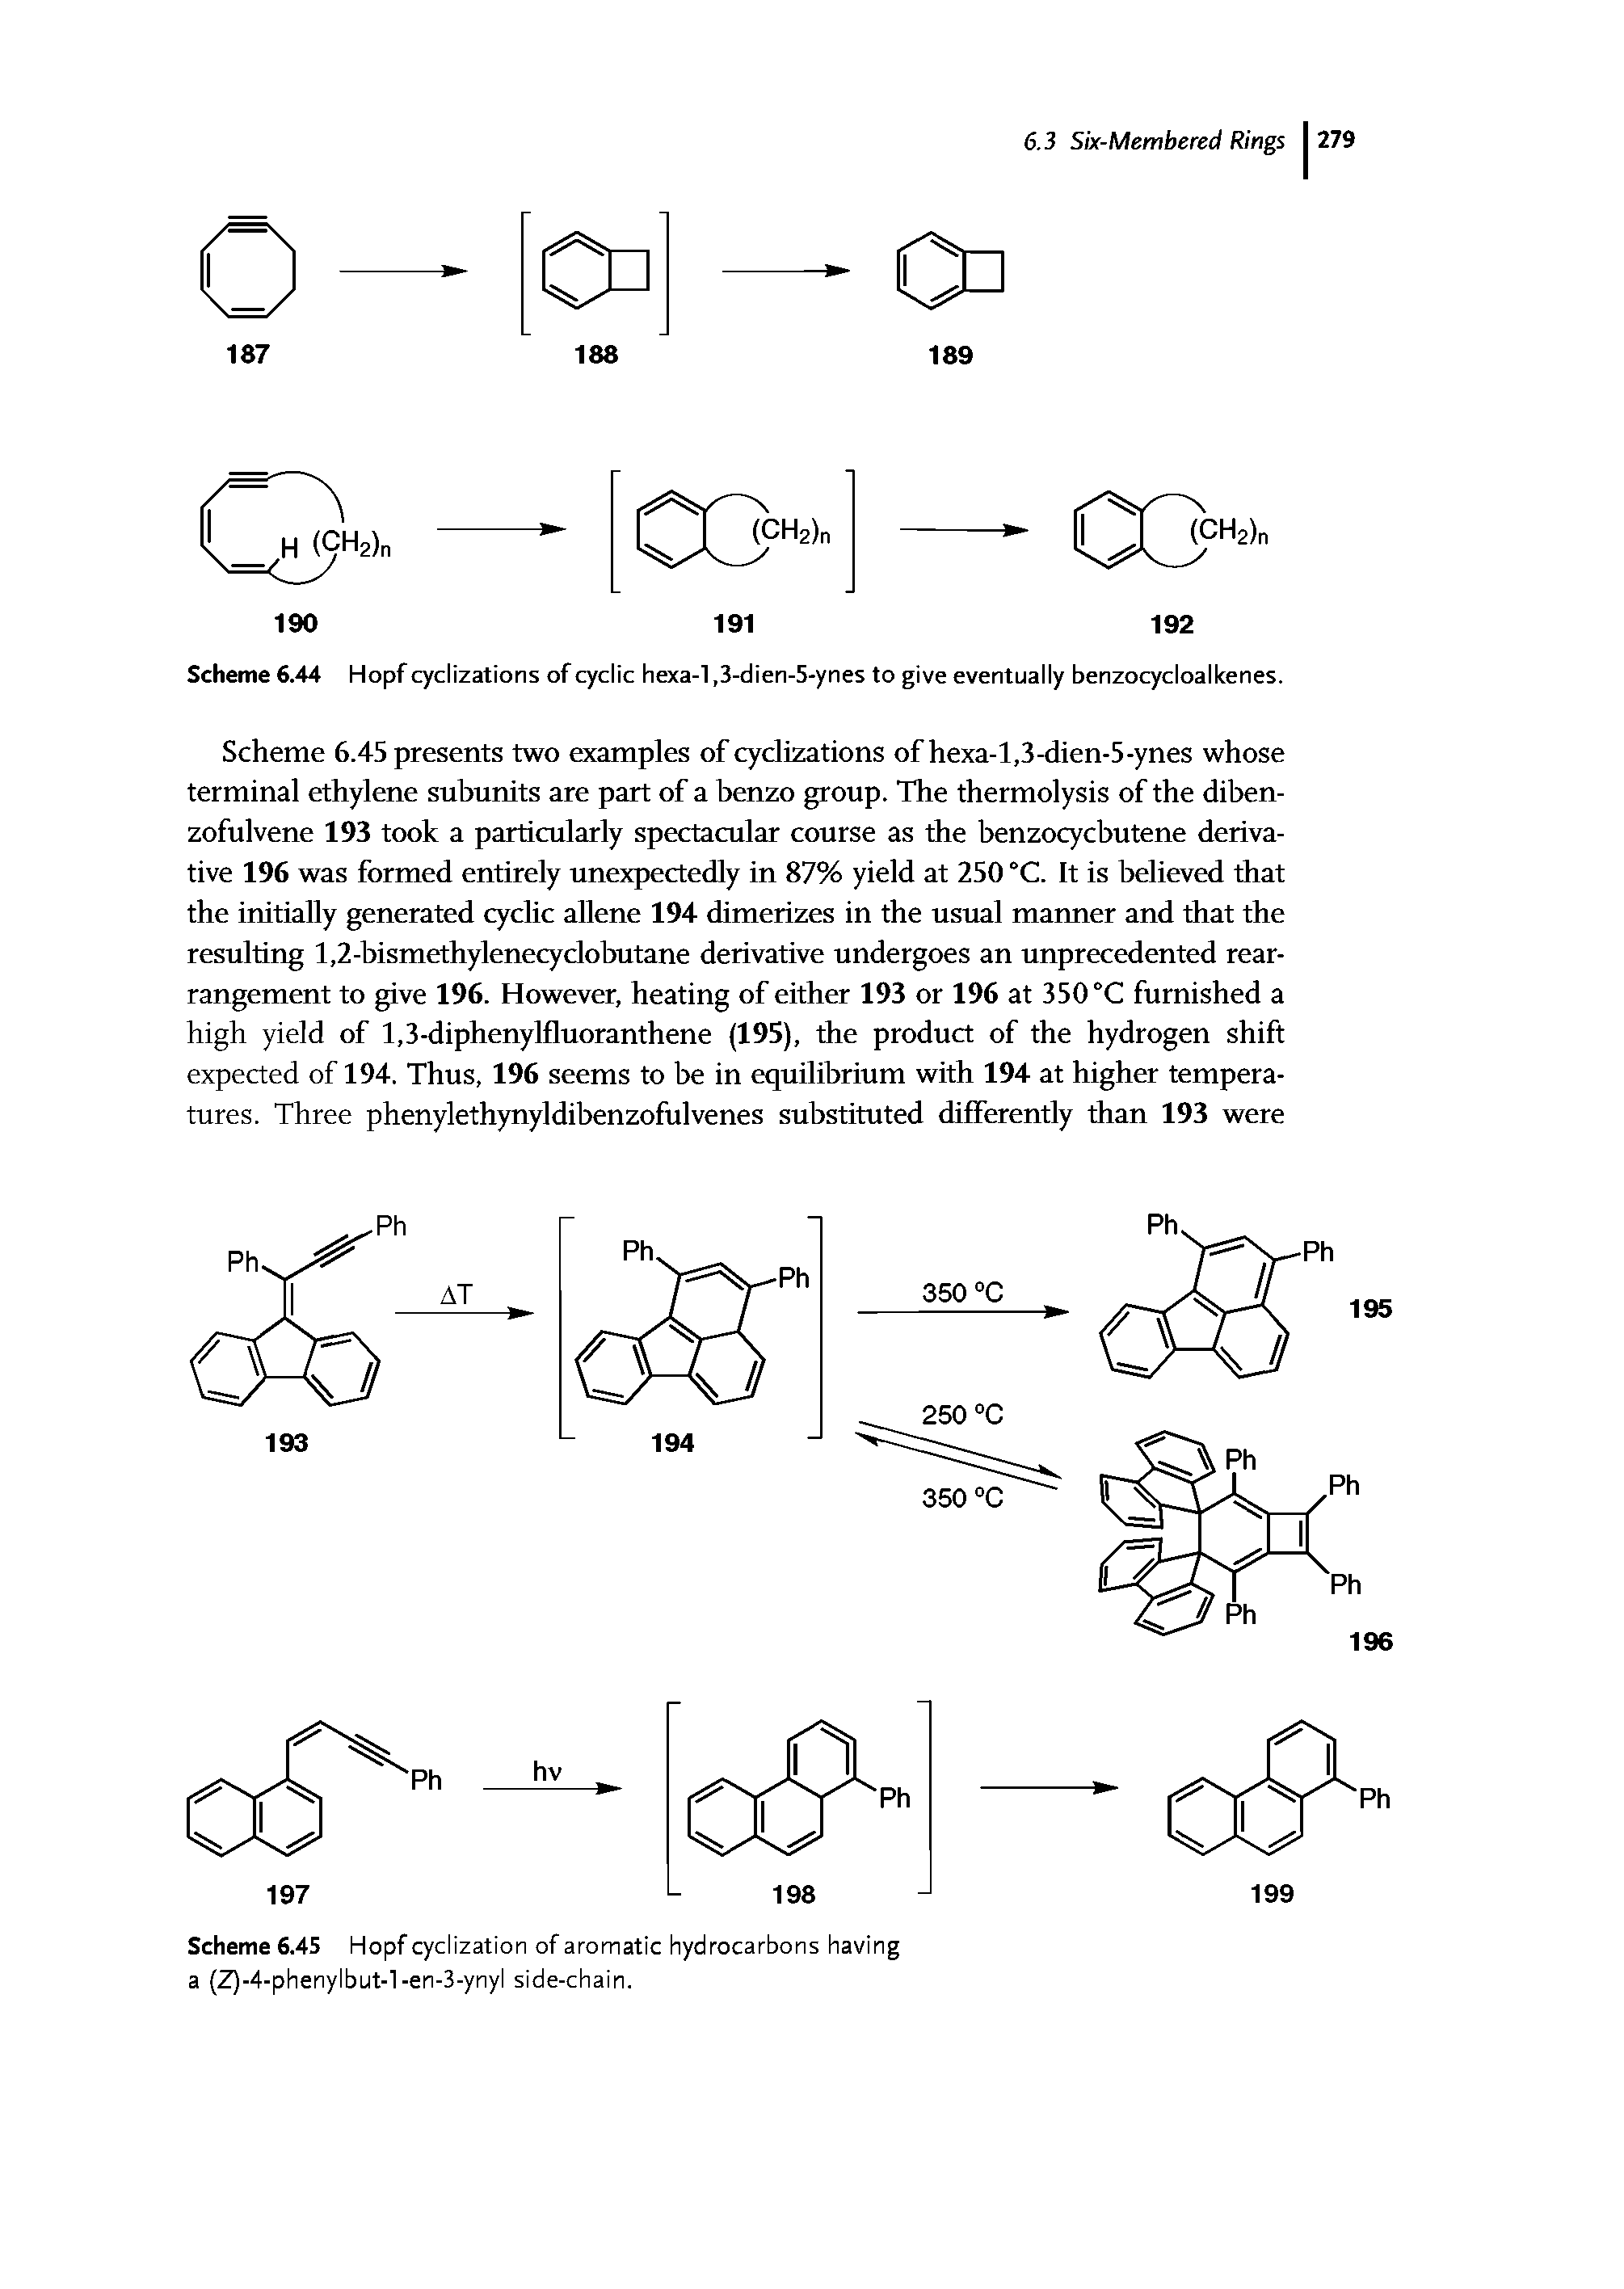 Scheme 6.44 Hopf cyclizations of cyclic hexa-l,3-dien-5-ynes to give eventually benzocycloalkenes.